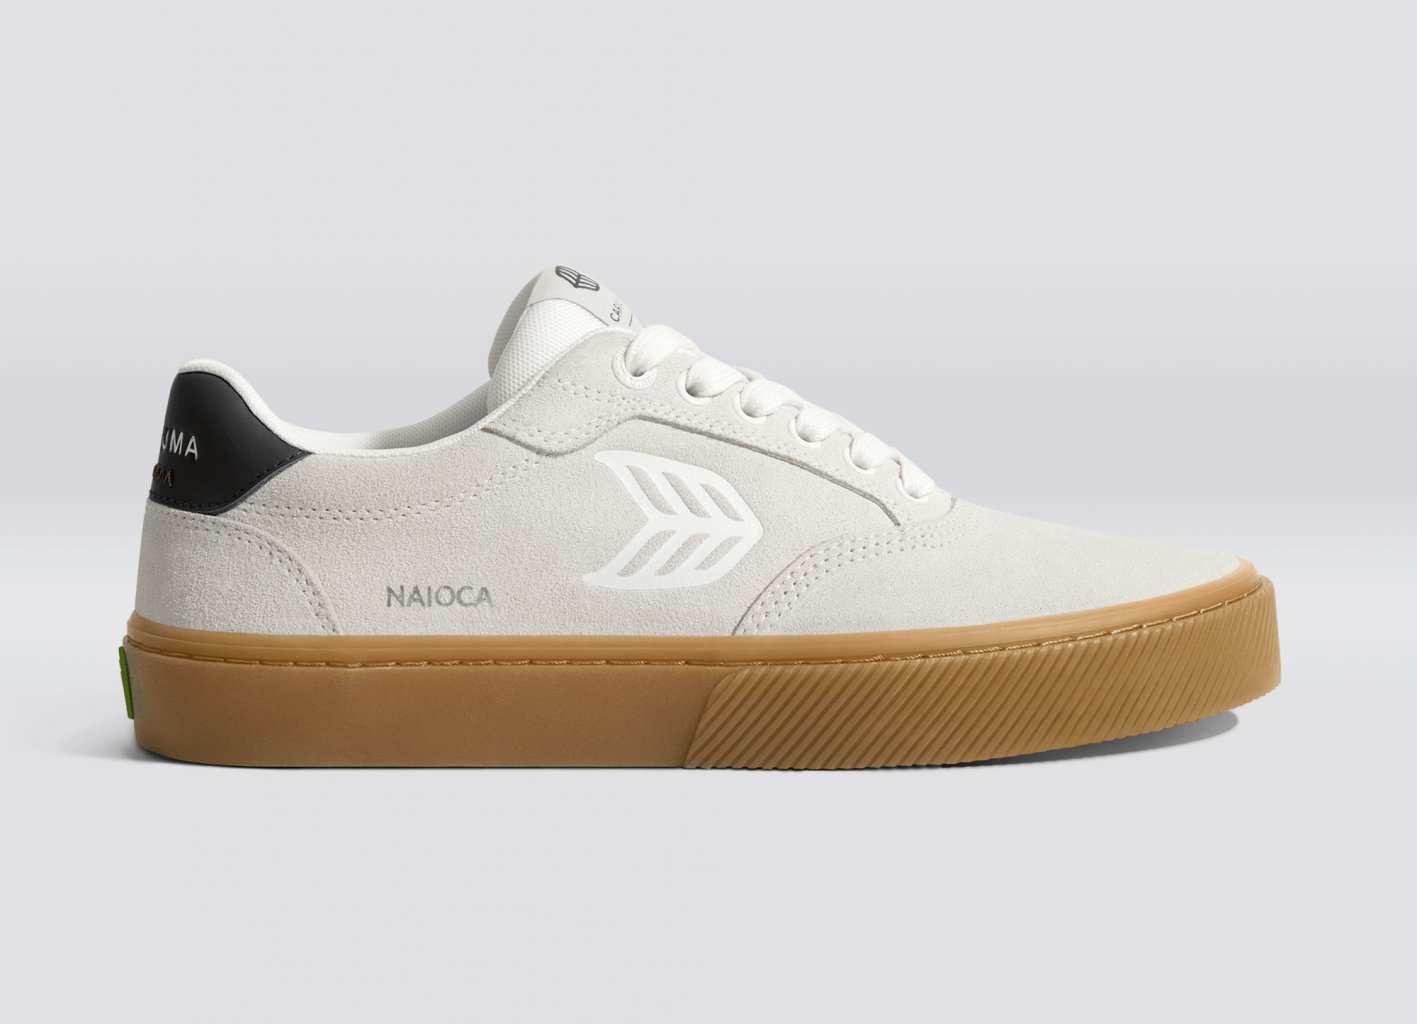 CARIUMA Naioca Vintage Gum Suede Shoes – Eco-conscious sneakers